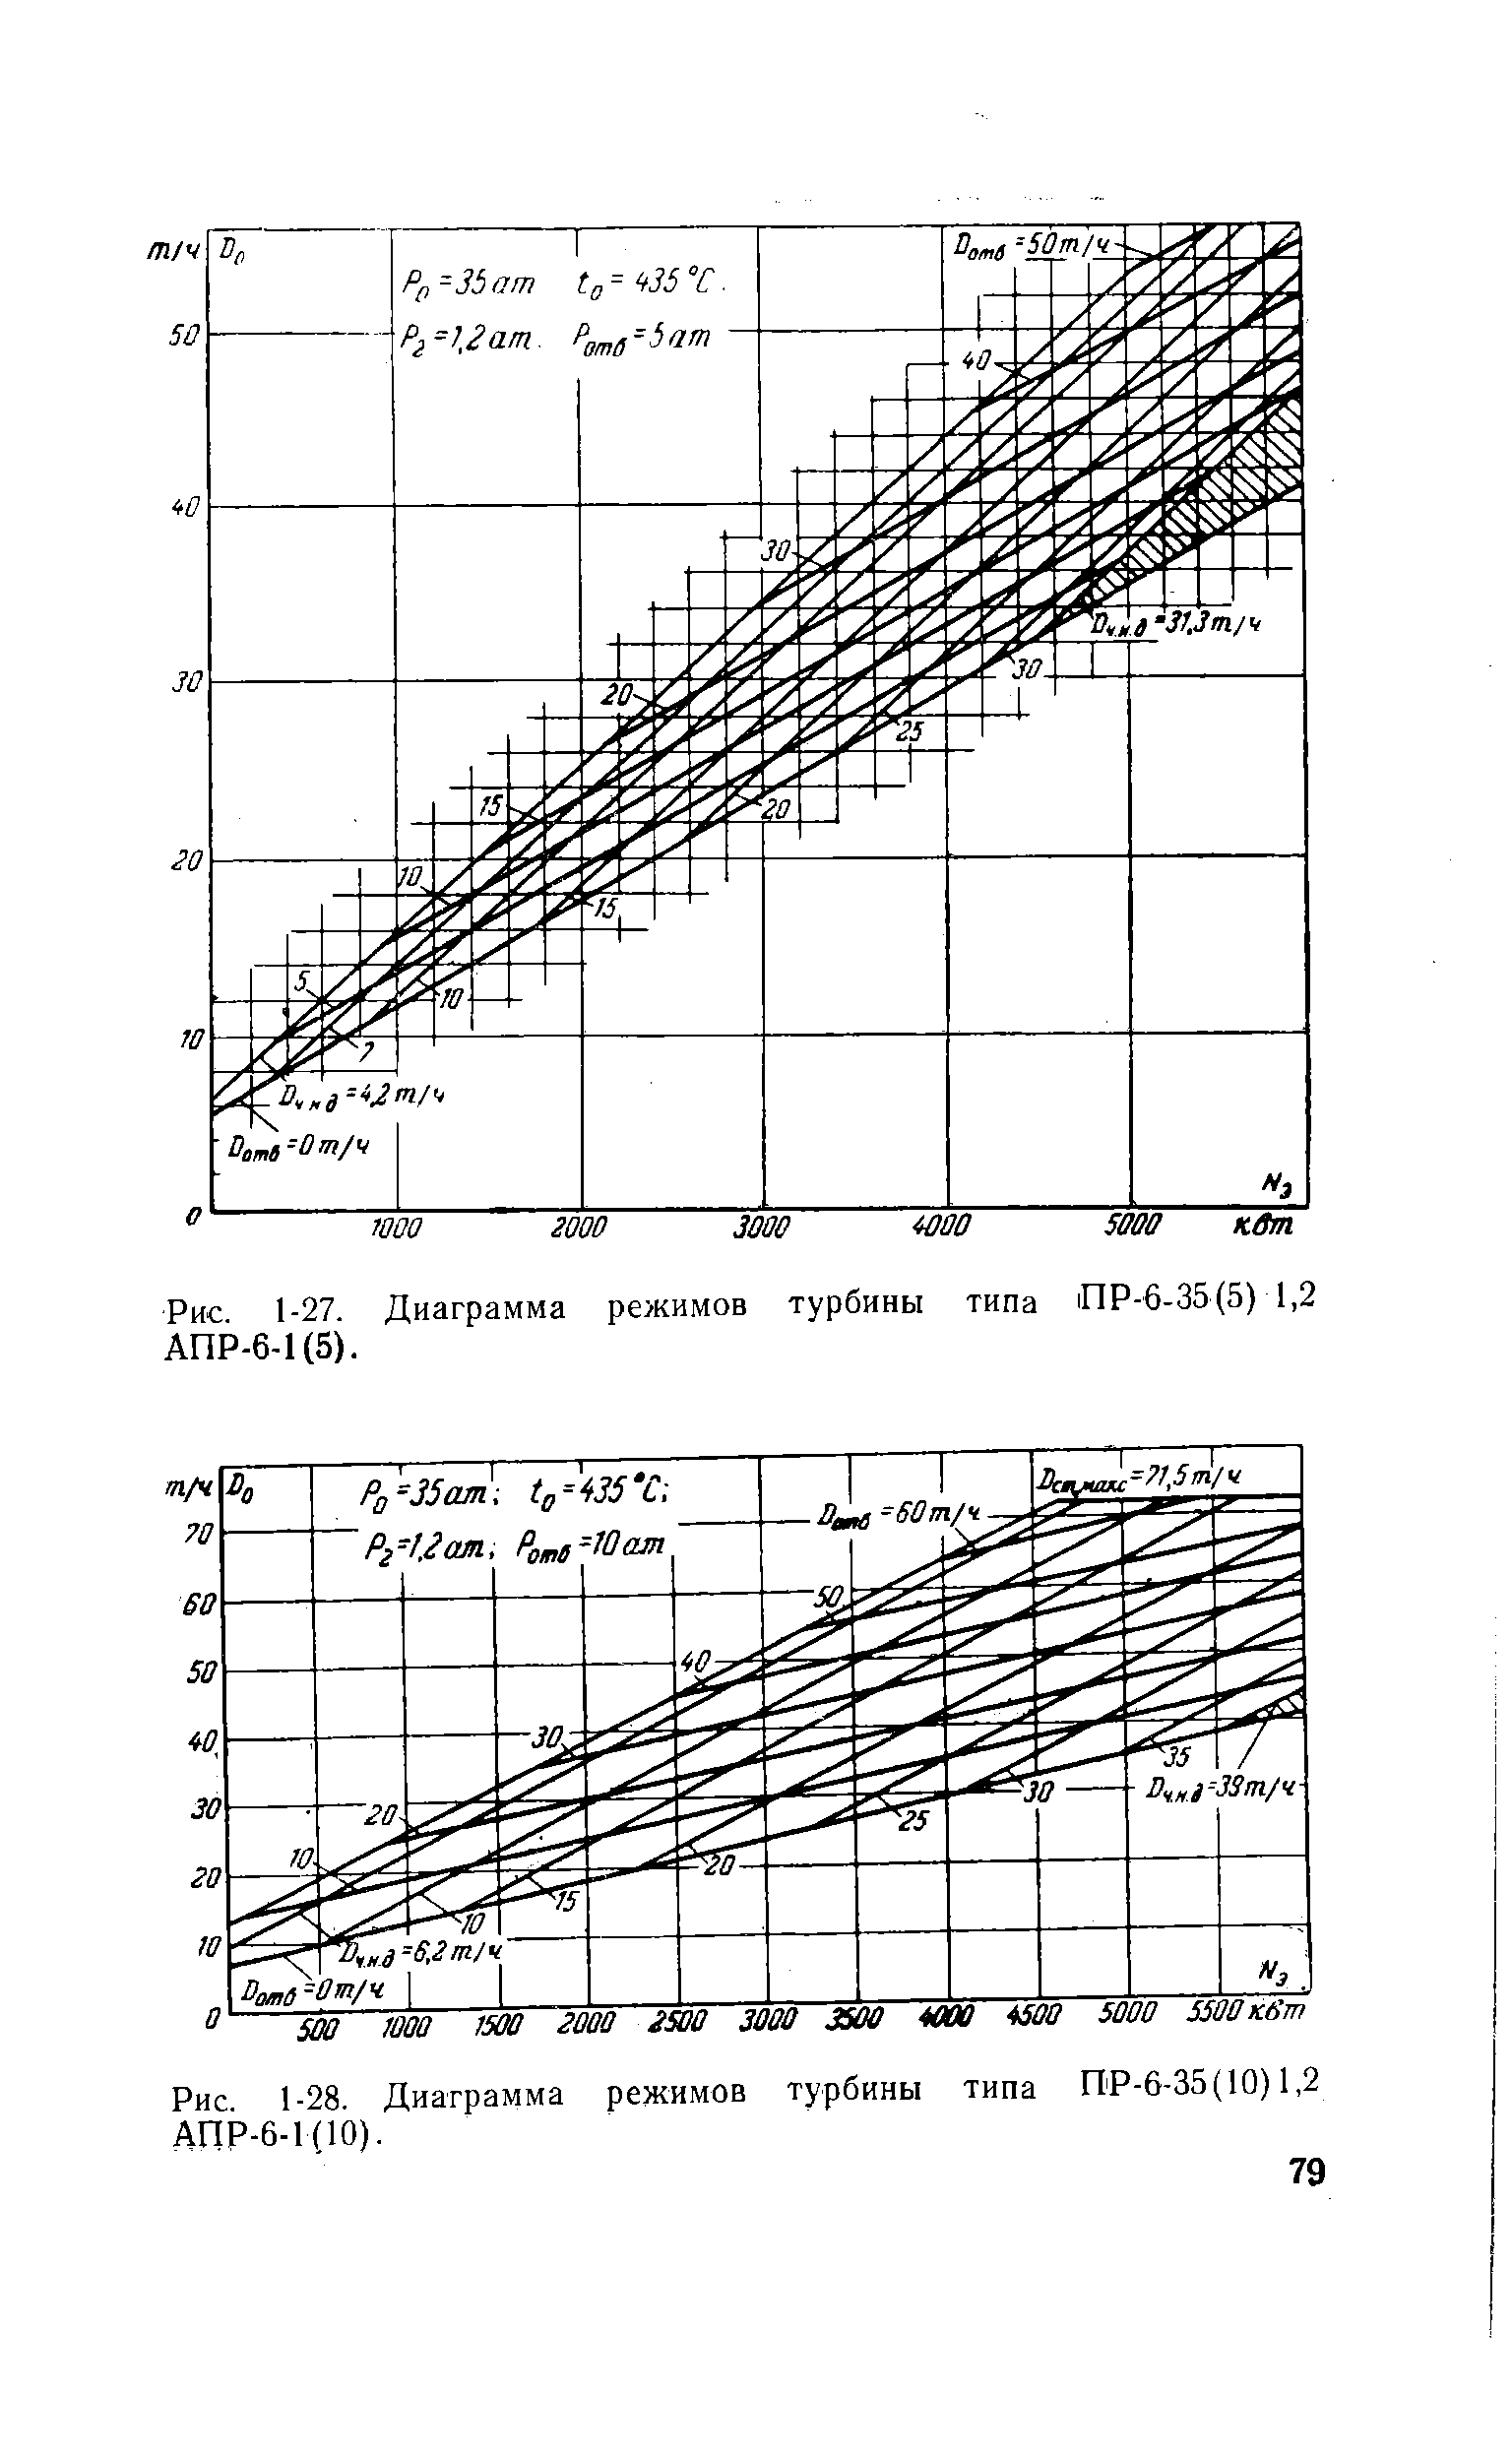 Рис. 1-28. Диаграмма режимов турбины типа ПР-6-35(10) 1,2 АПР-6-1(10).
